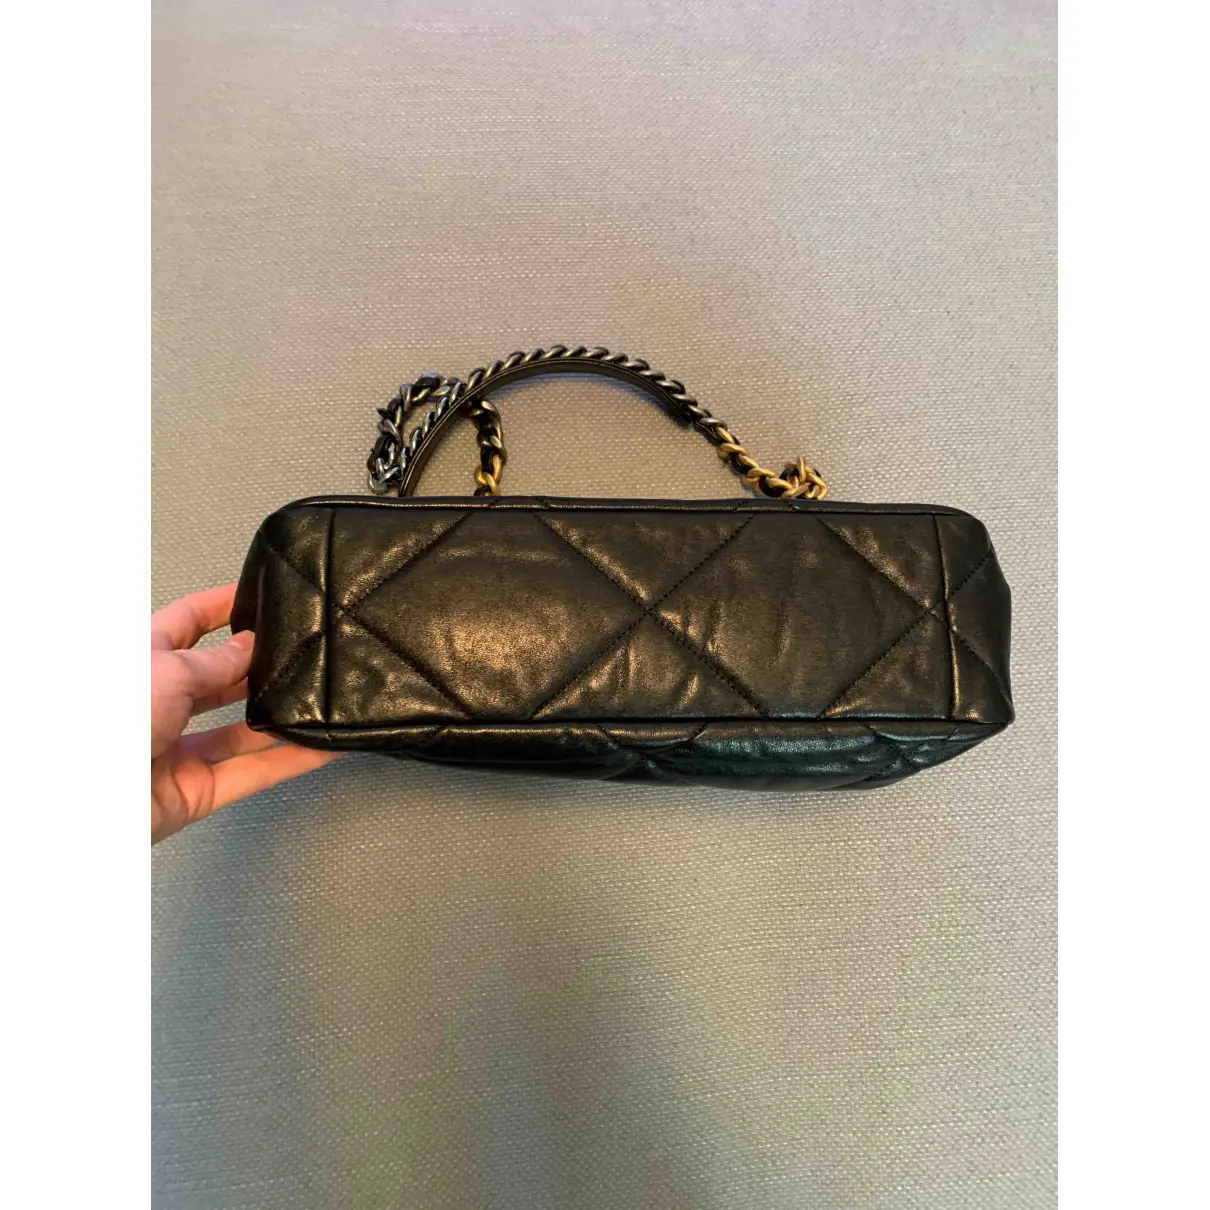 Buy Chanel Chanel 19 leather handbag online